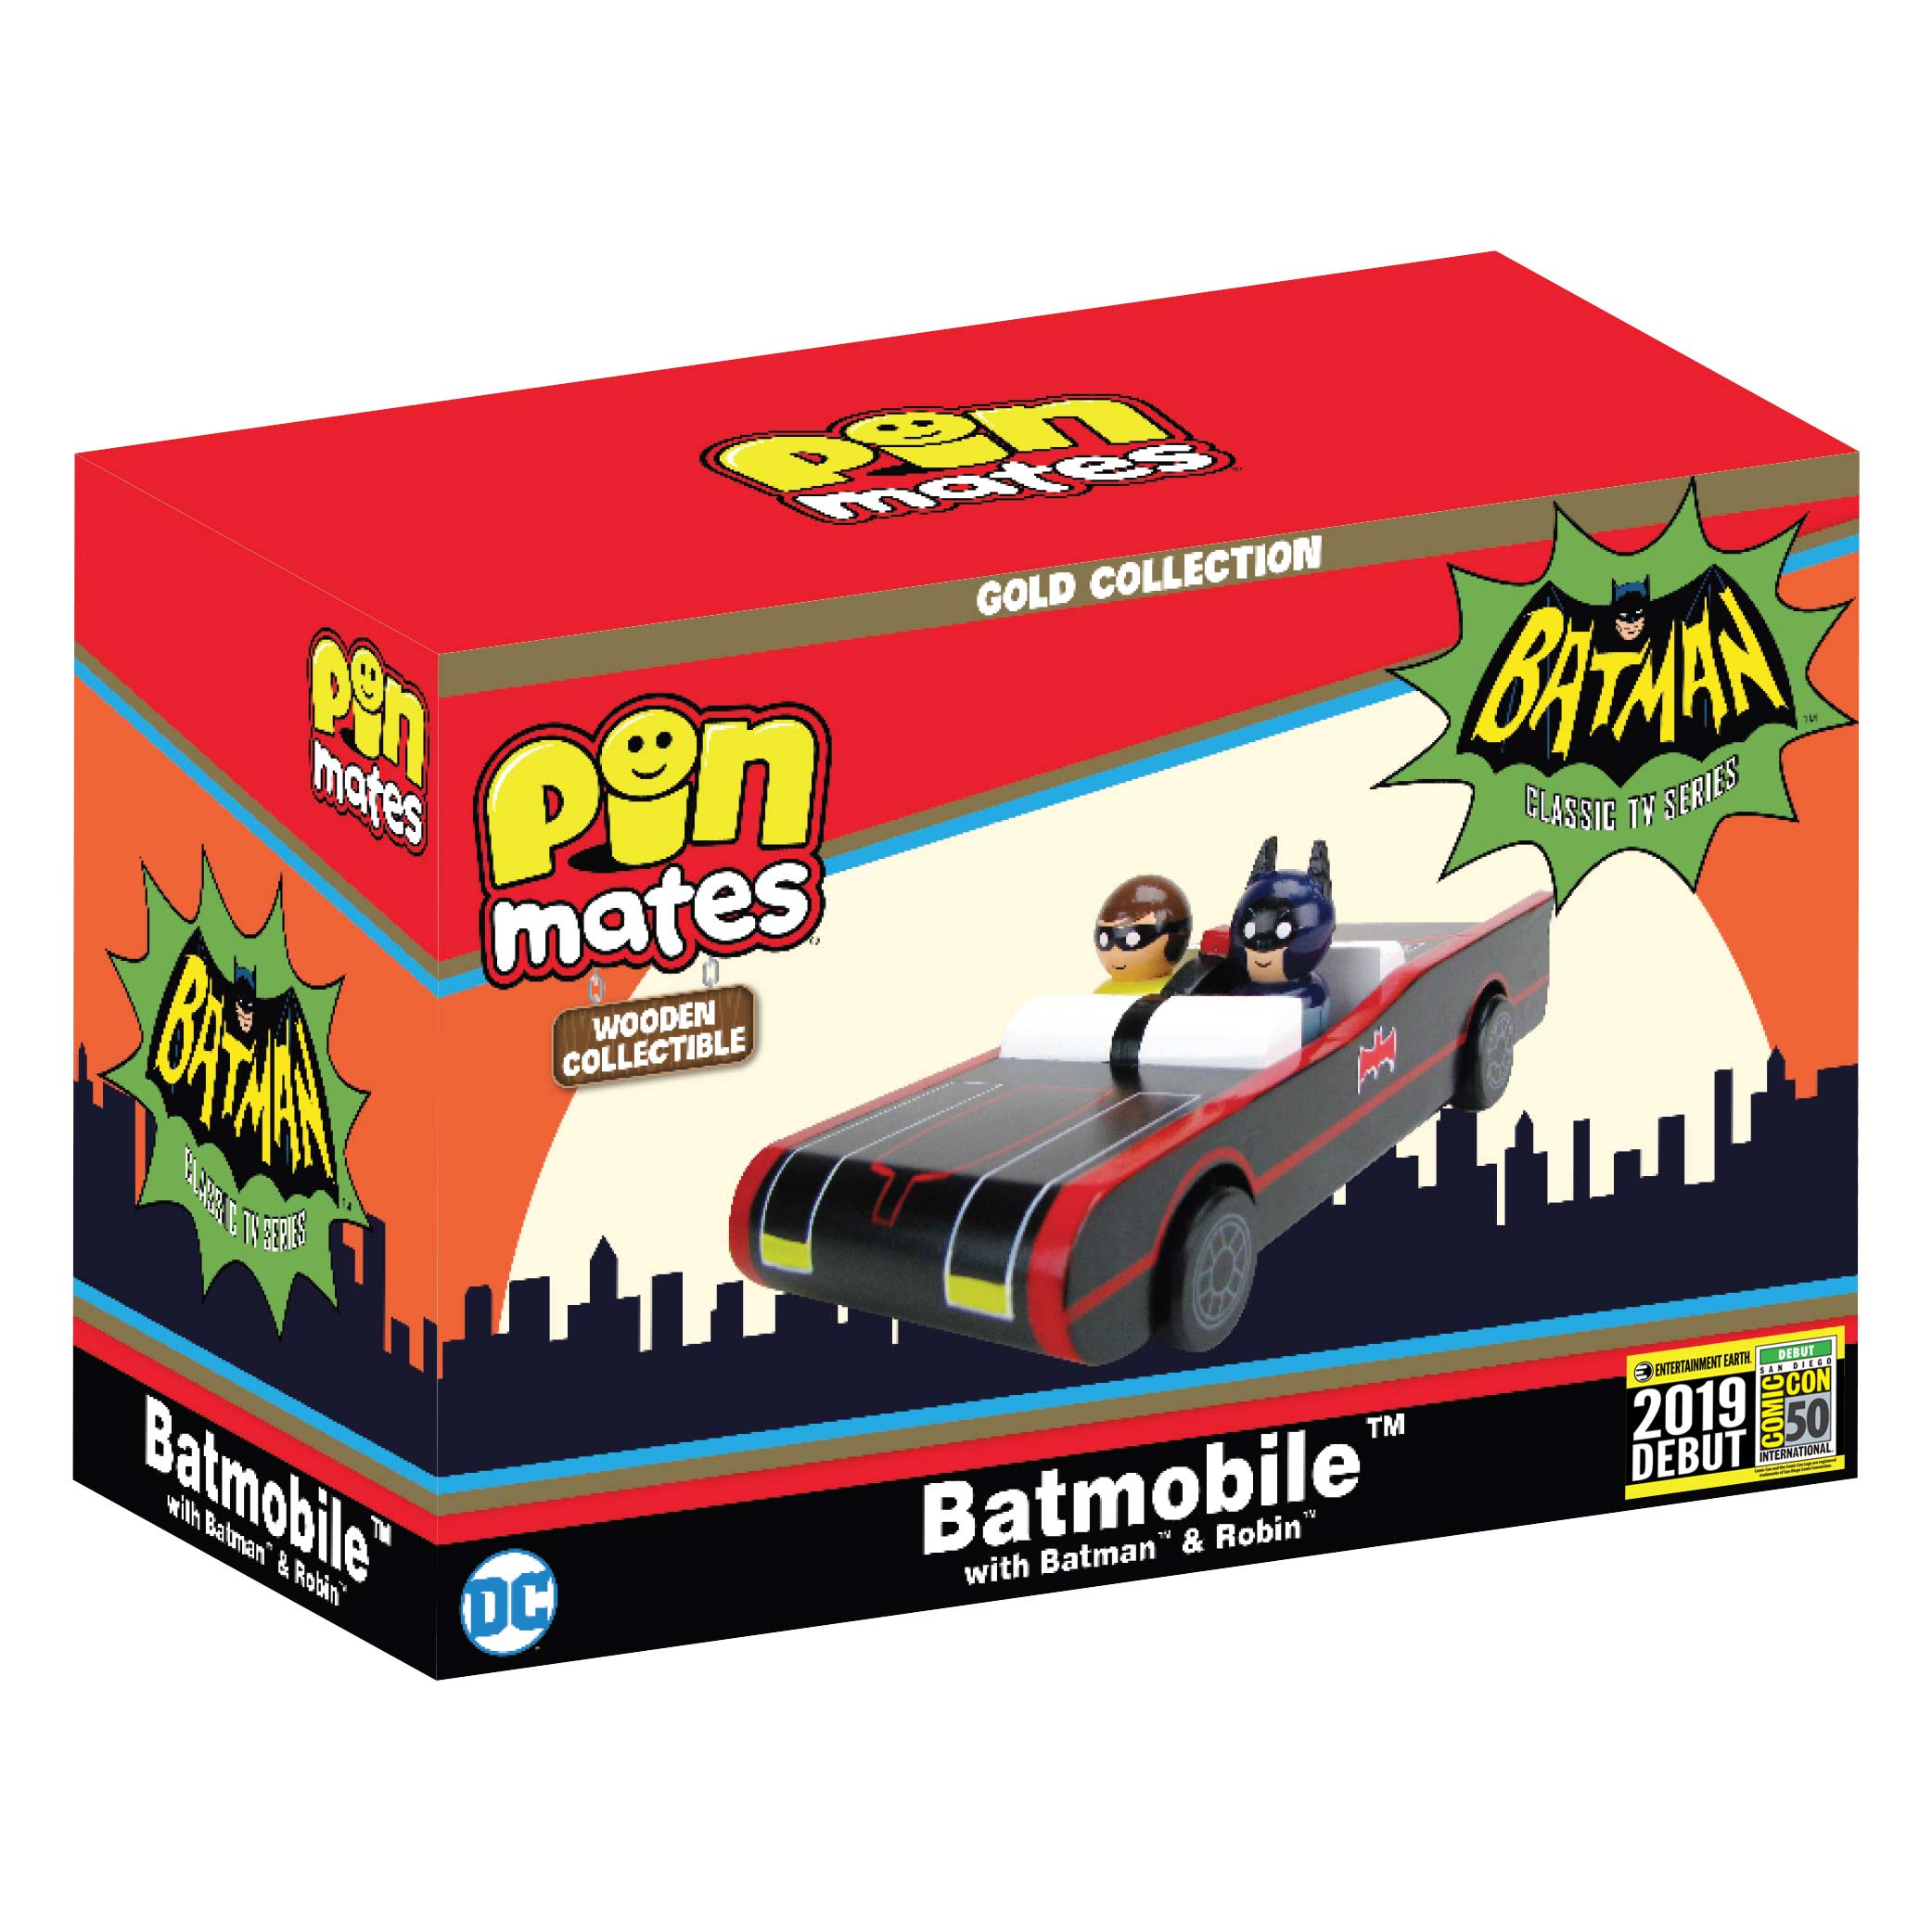 Batman, Robin, Batmobile and Batcave